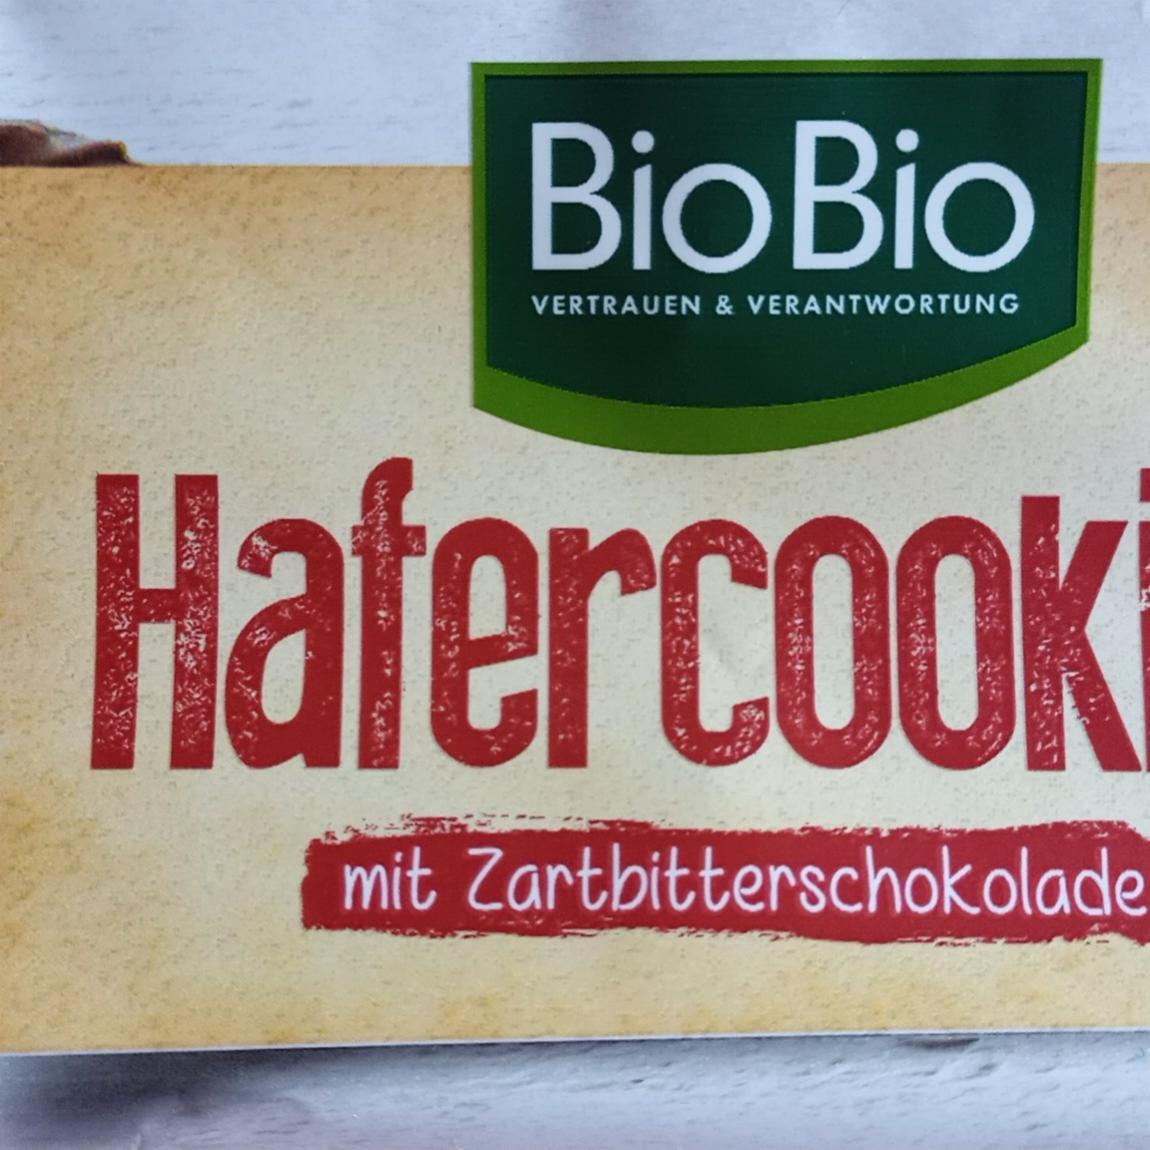 Fotografie - Hafercookies mit Zartbitterschokolade BioBio